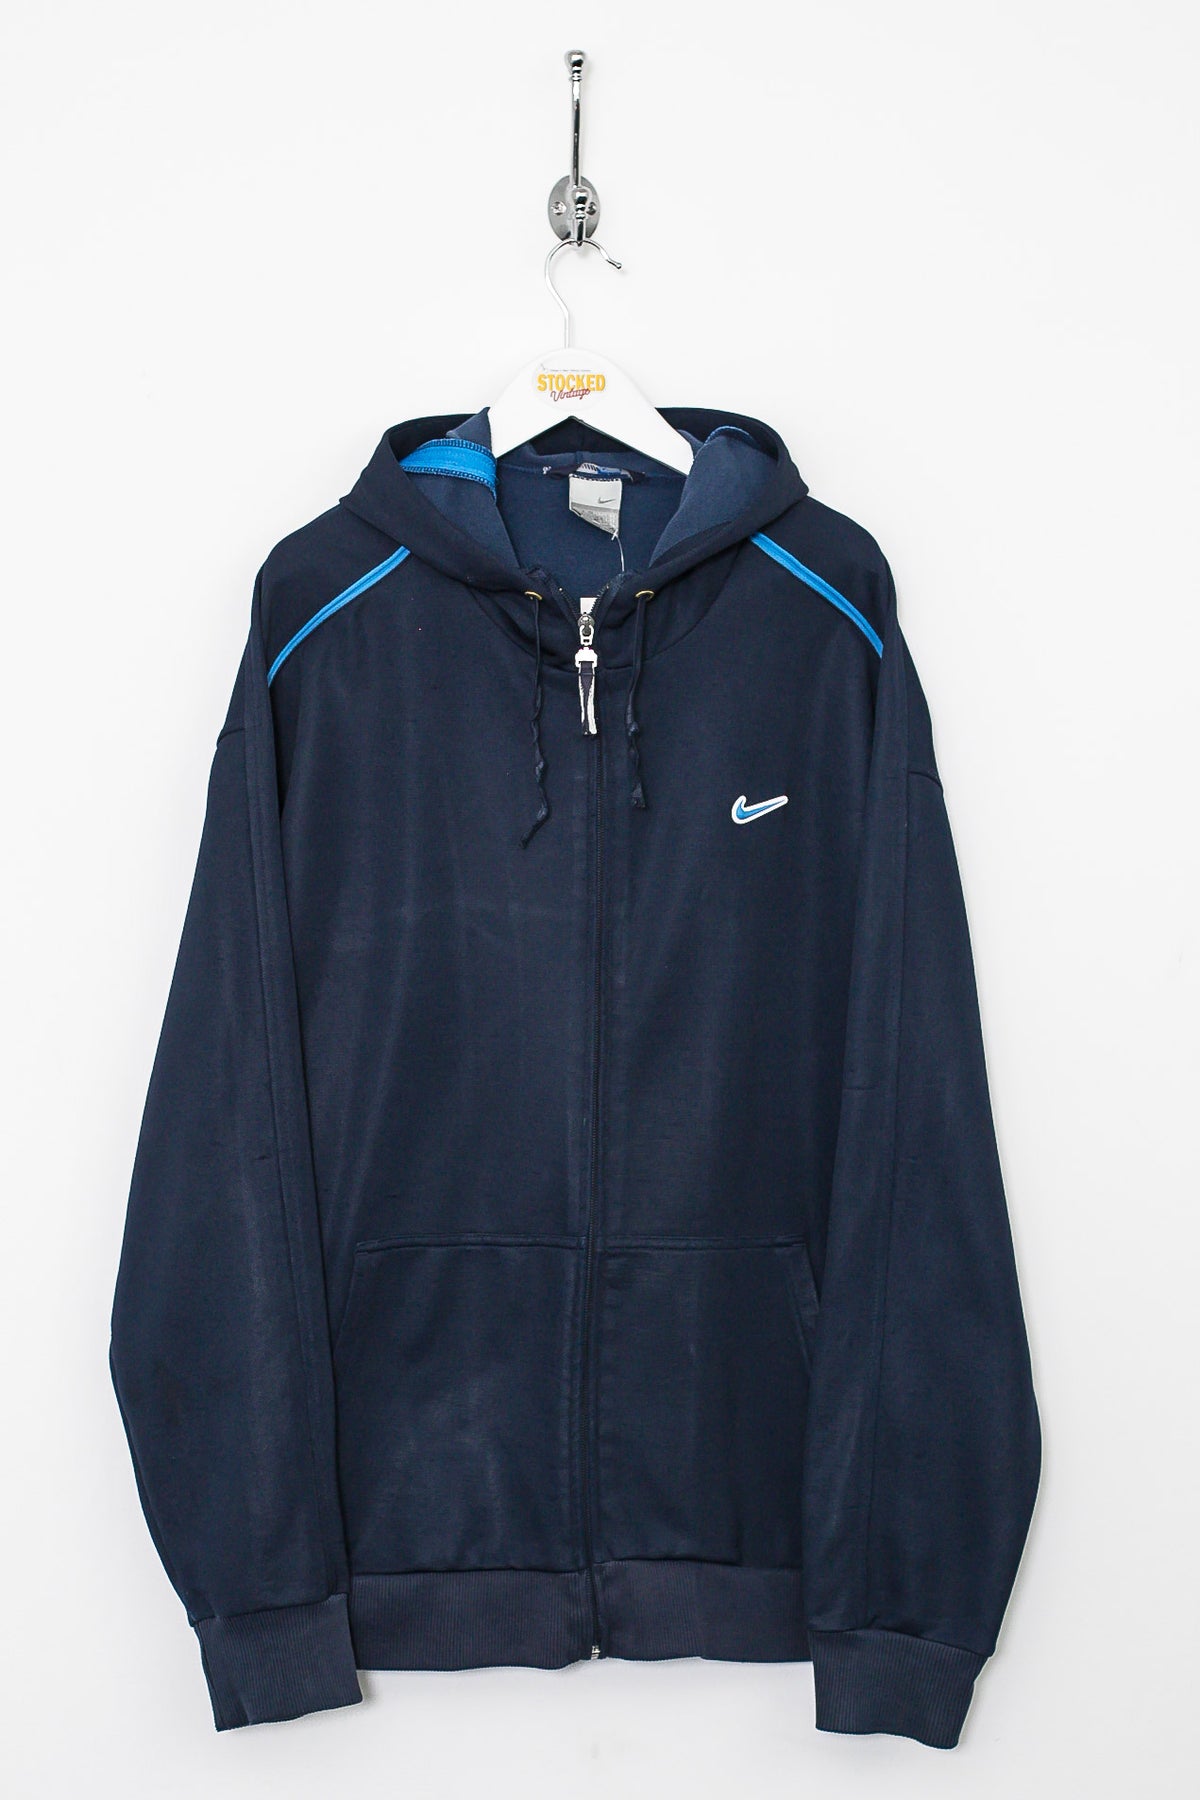 00s Nike Jacket (XL)